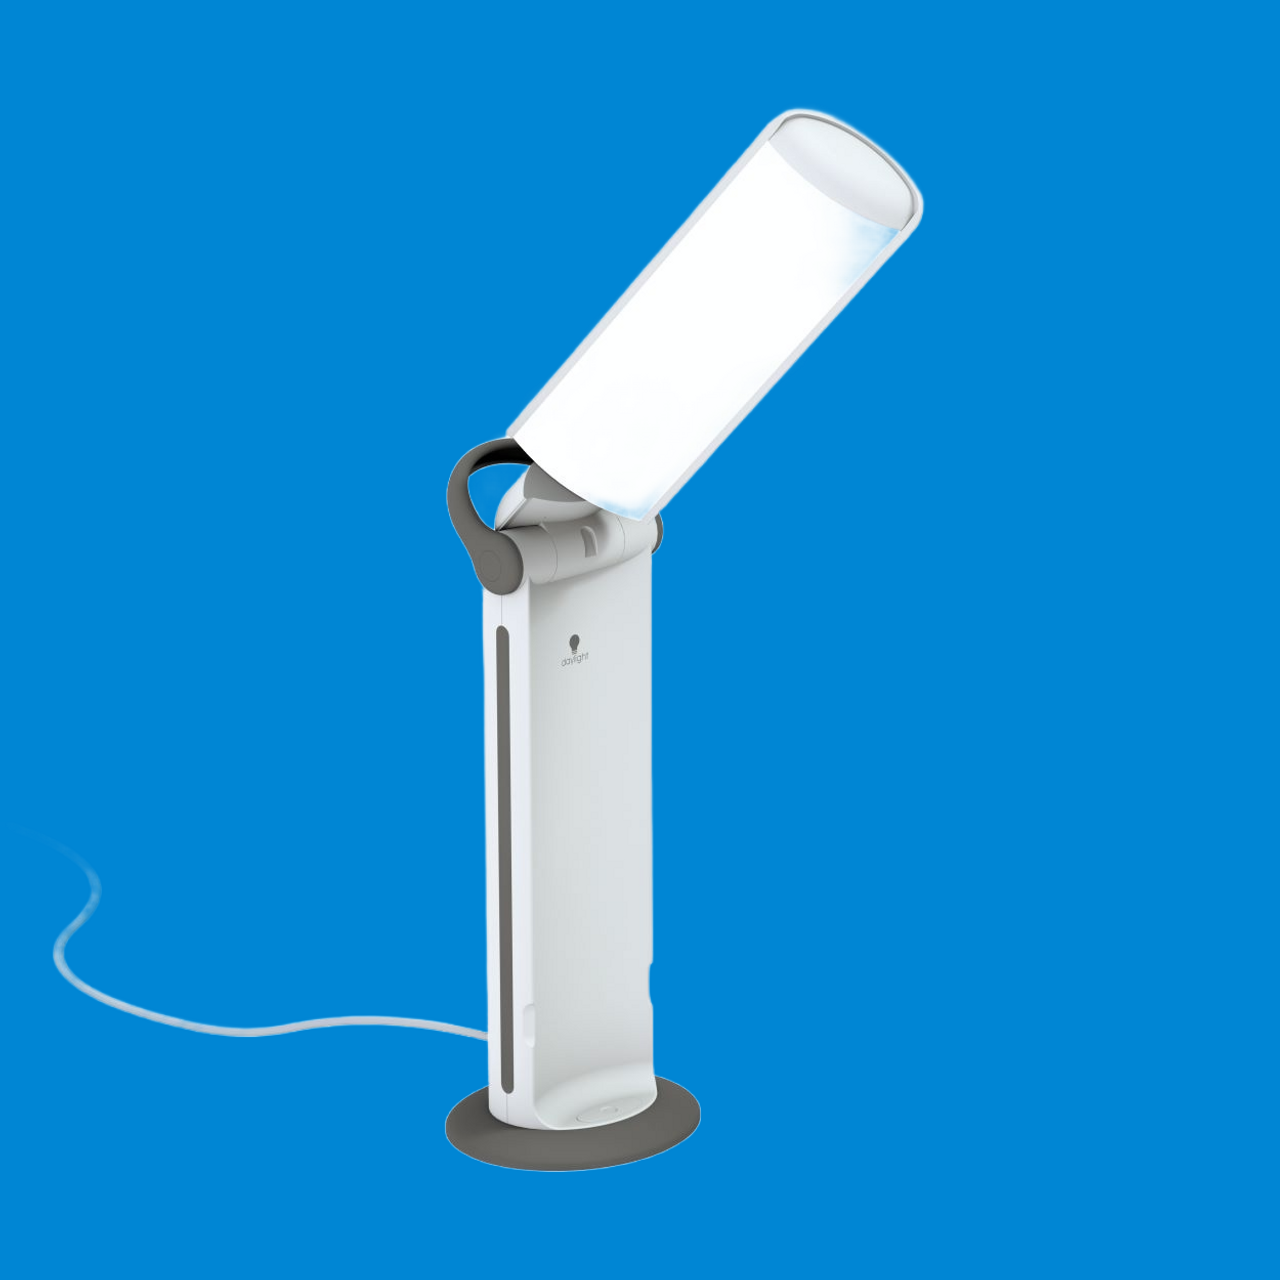 image: Daylight Twist 2 lamp, blue background